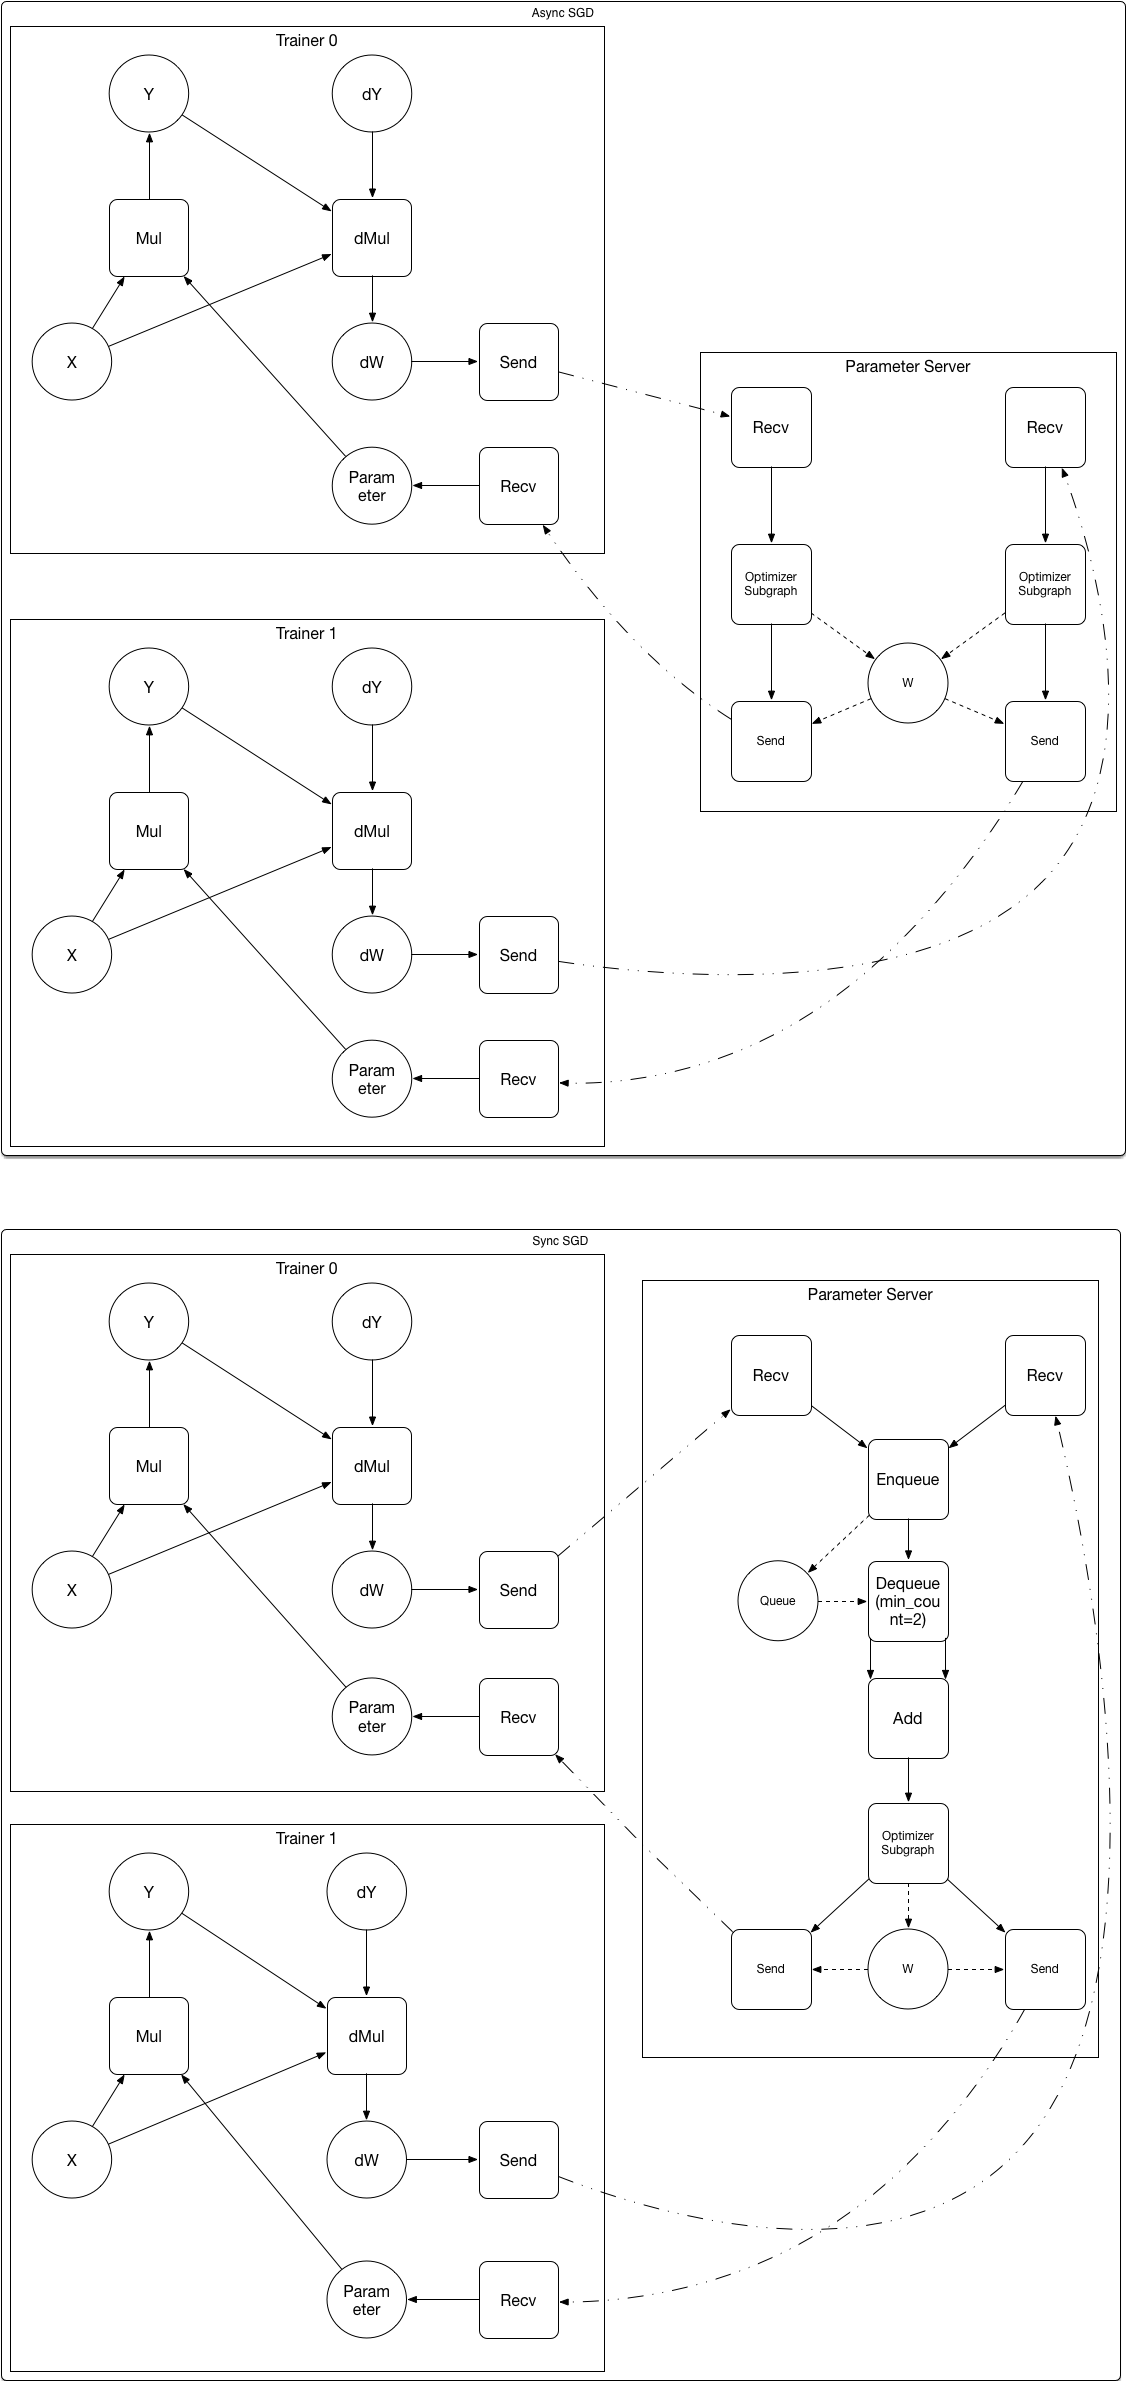 doc/design/ops/src/dist-graph.png